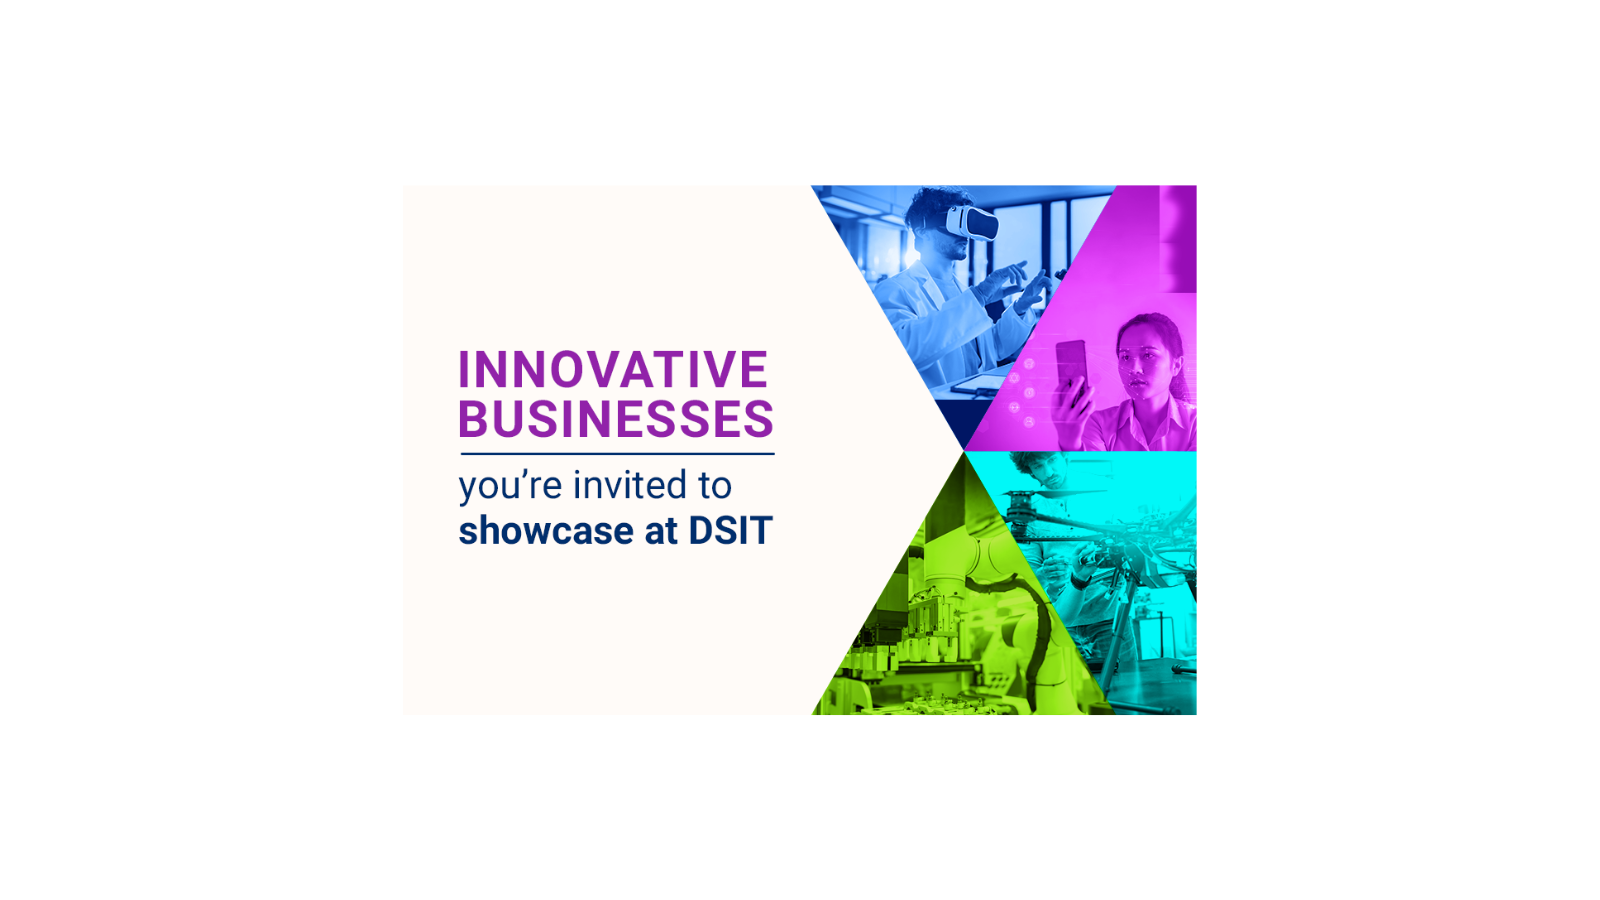 DSIT to showcase innovative businesses